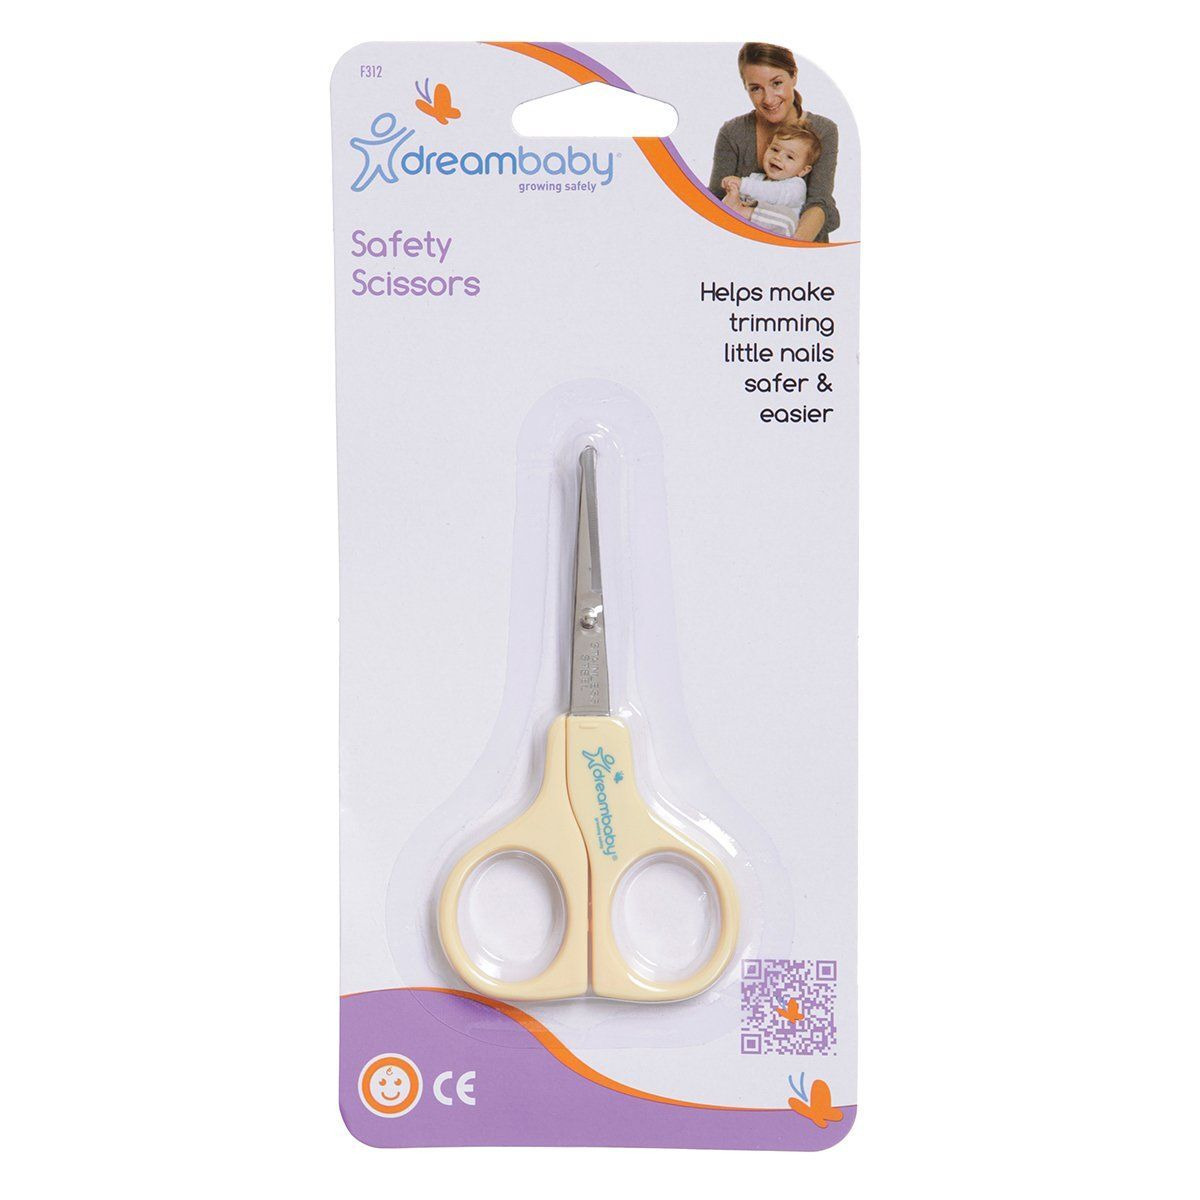 Dreambaby Baby Safety Scissors